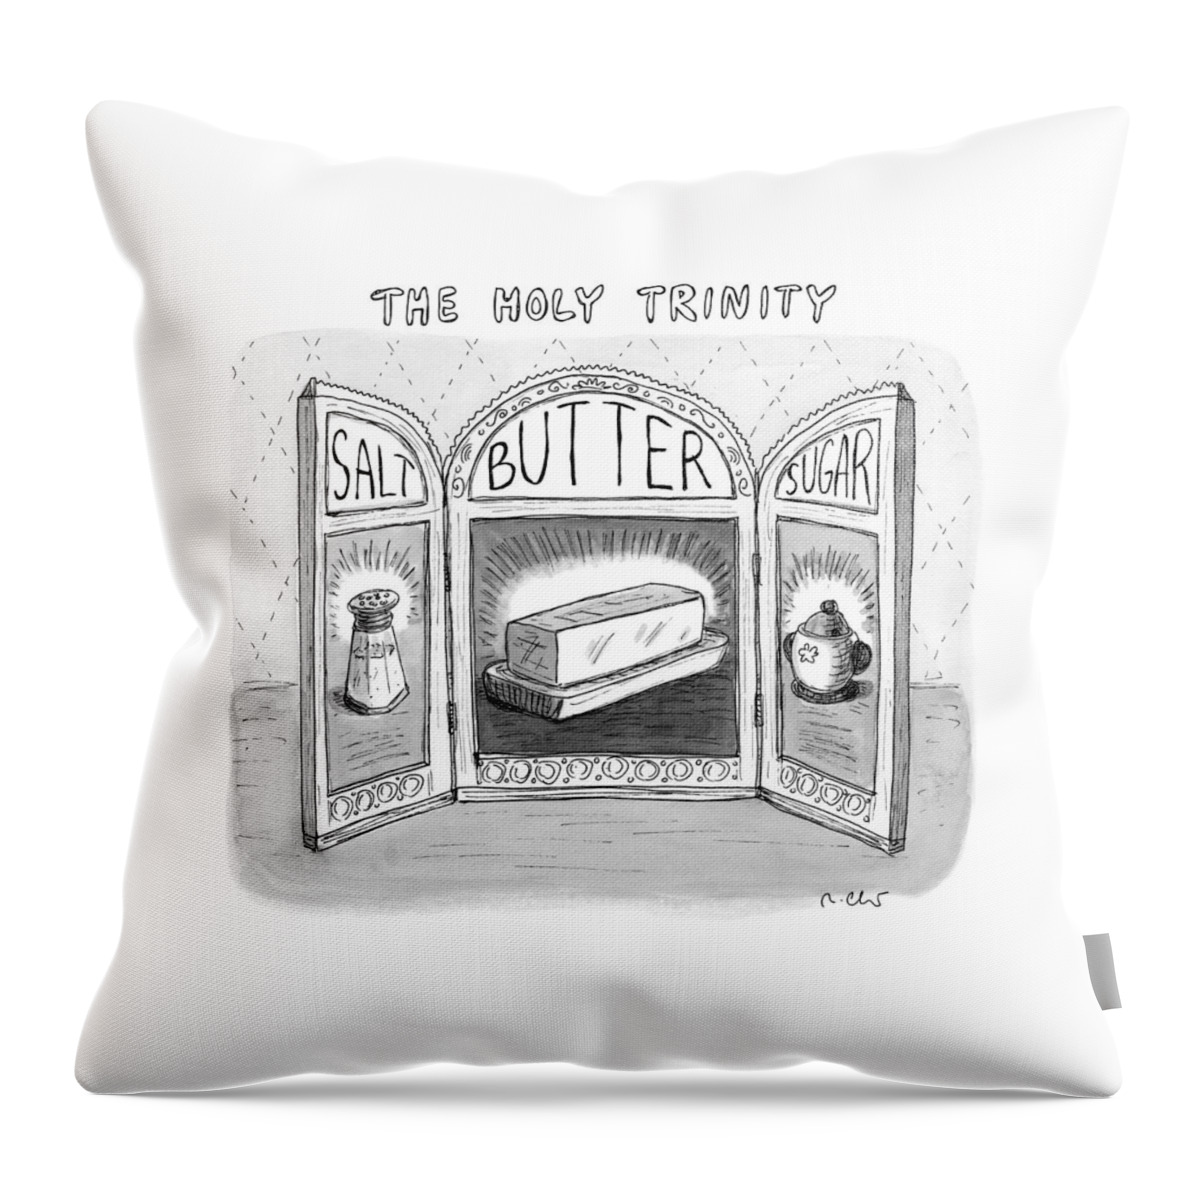 The Holy Trinity Throw Pillow